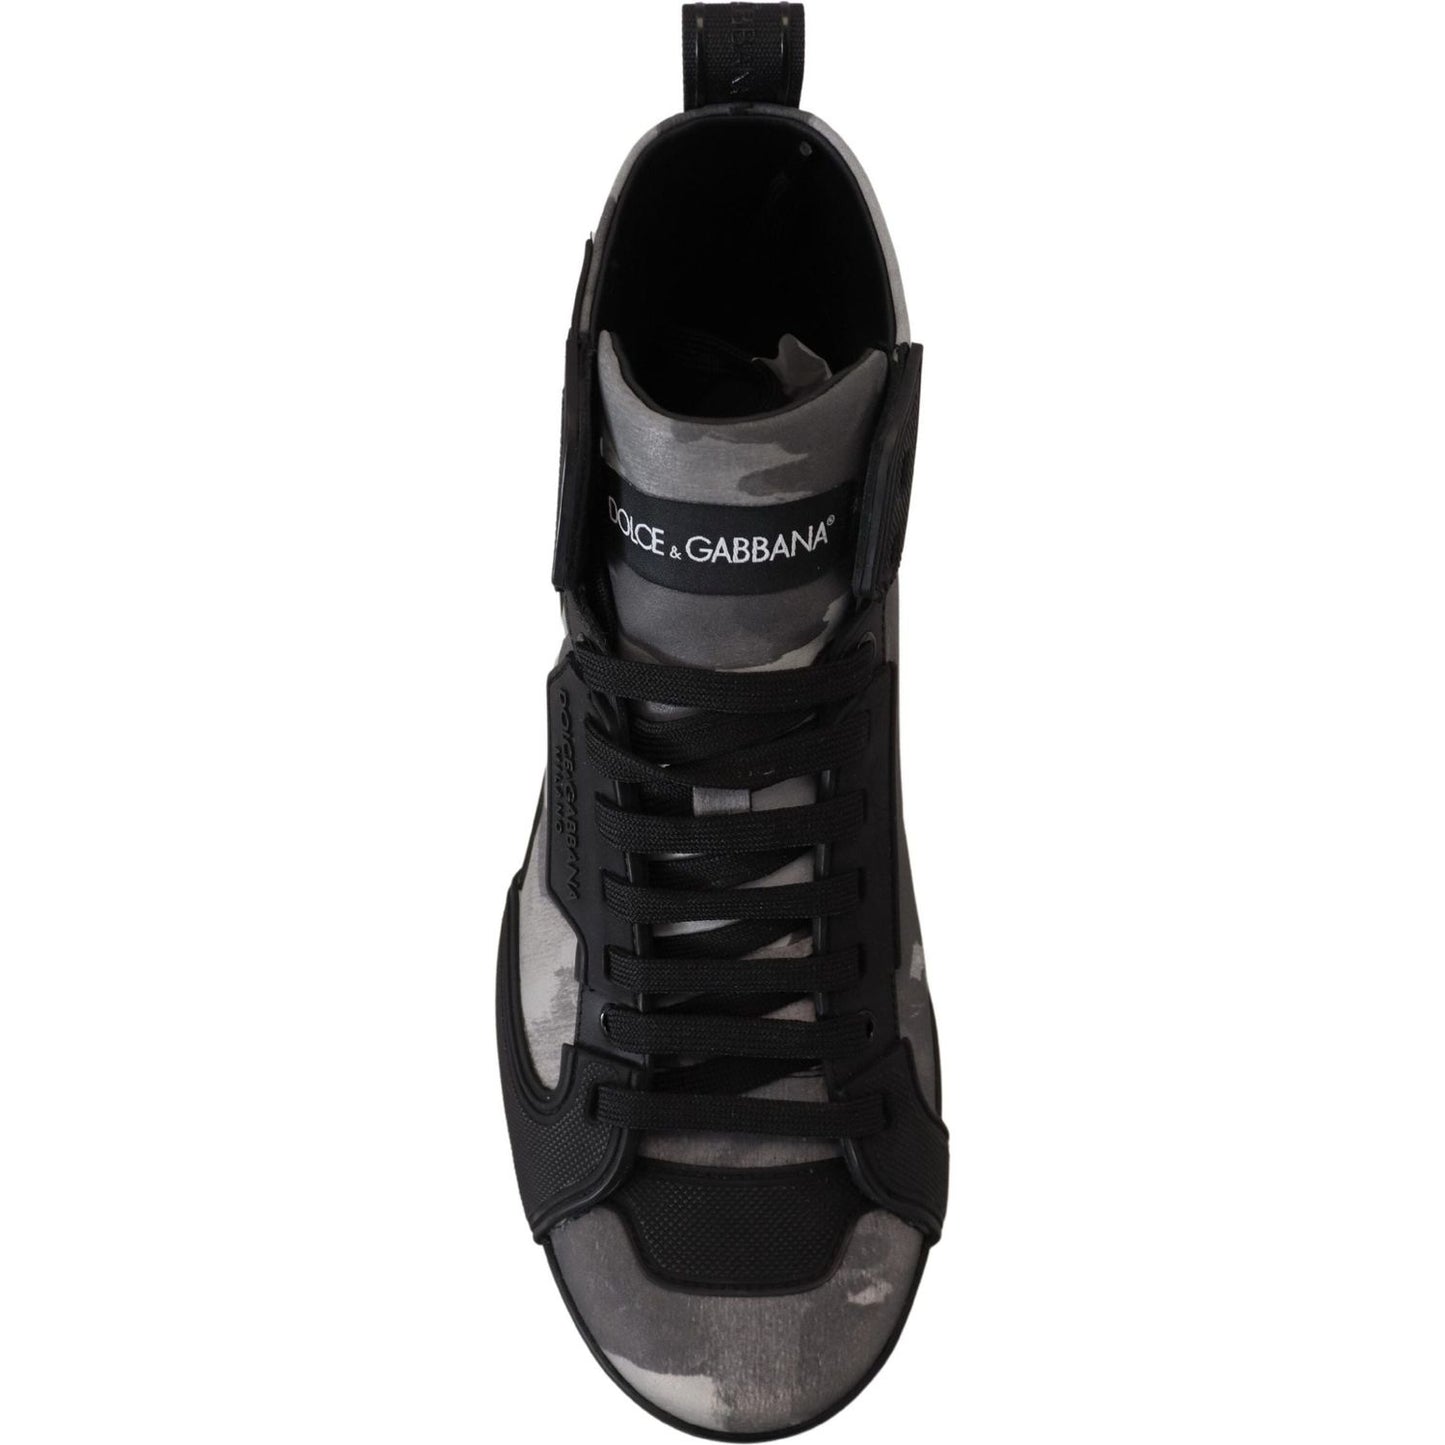 Dolce & Gabbana Camo Gray High-Top Sneakers gray-canvas-cotton-high-tops-sneakers-shoes